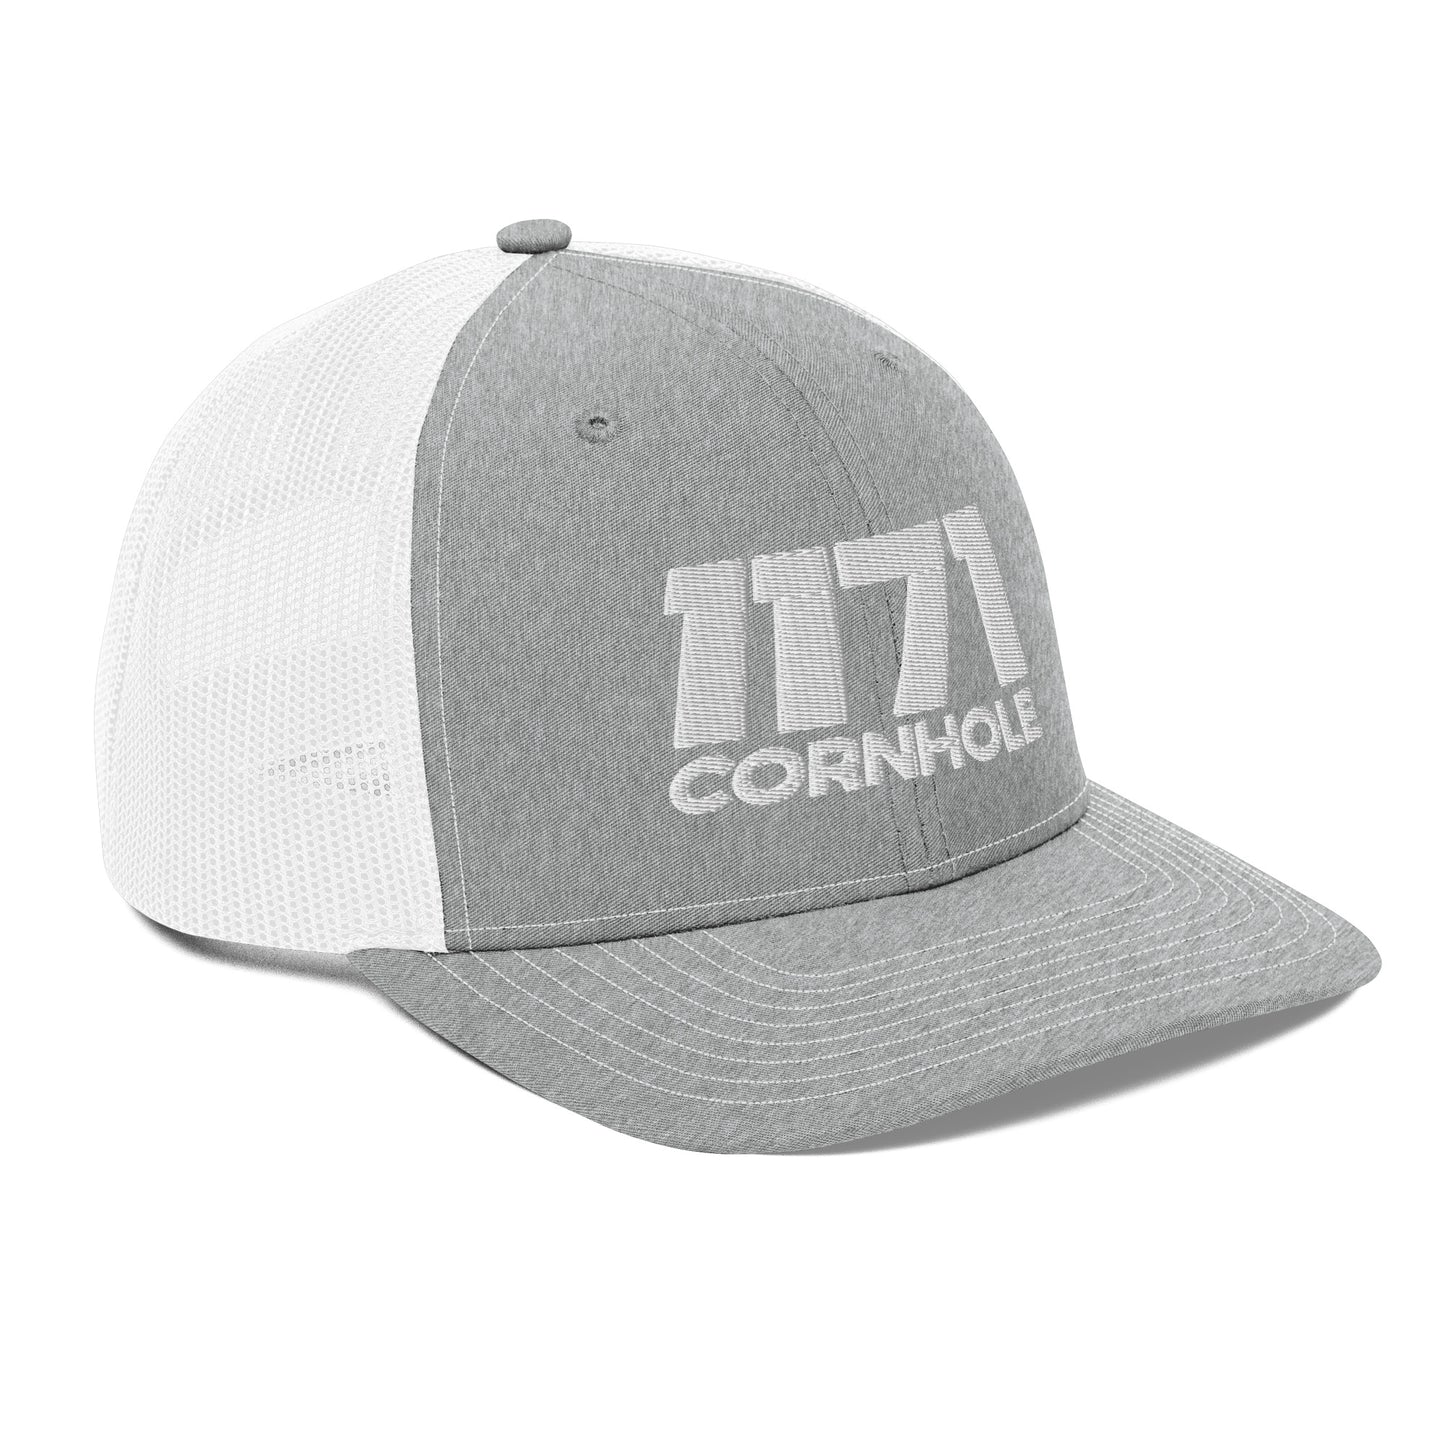 1171 Cornhole Embroidered Hat